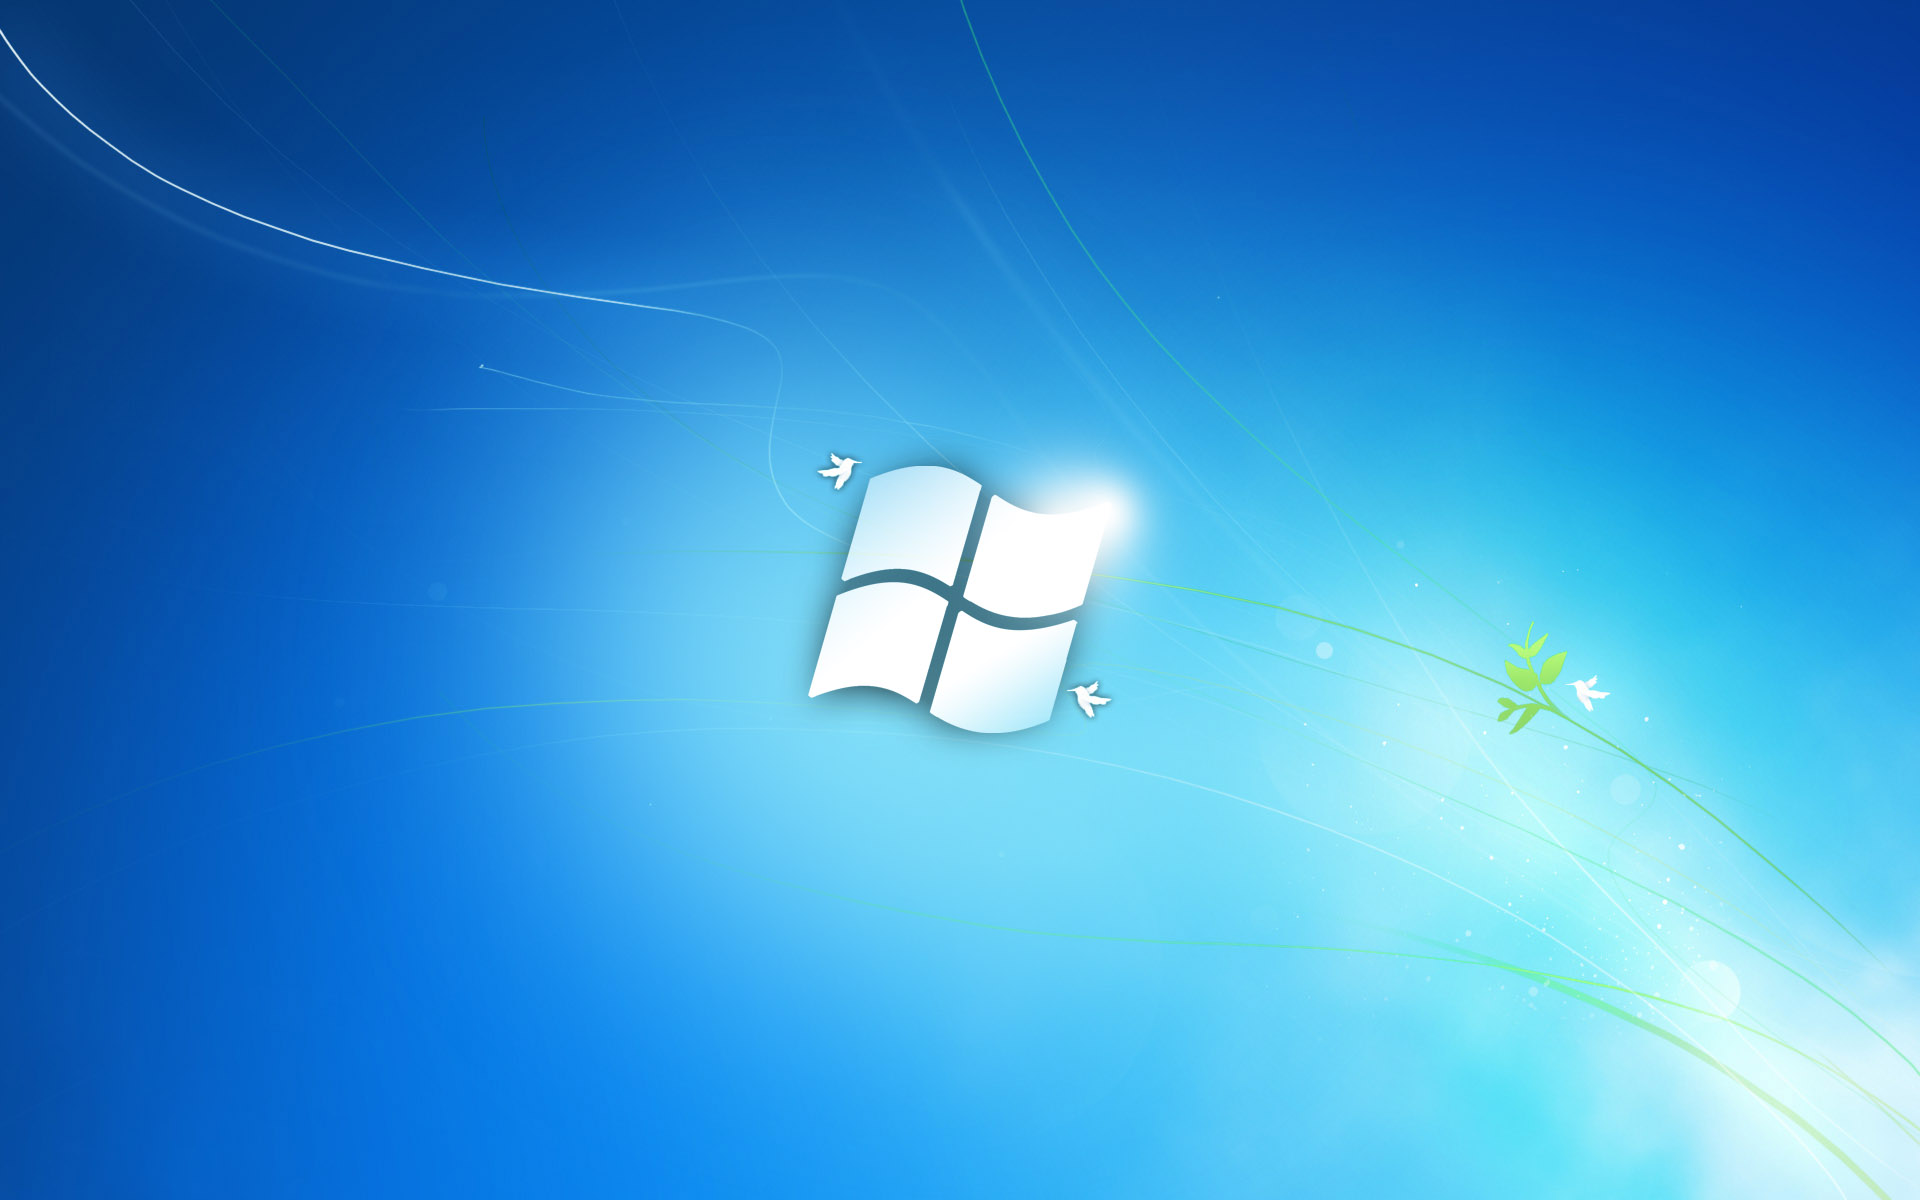 Technology Windows HD Wallpaper | Background Image